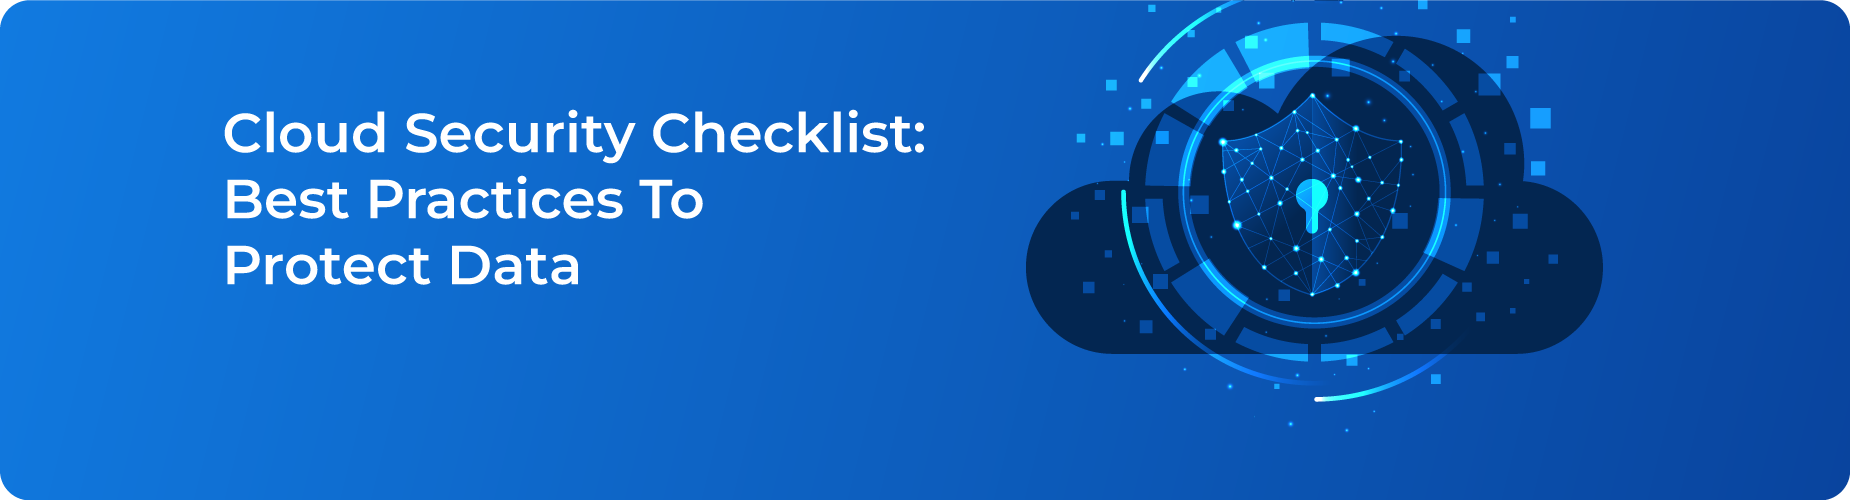 Cloud Security Checklist github